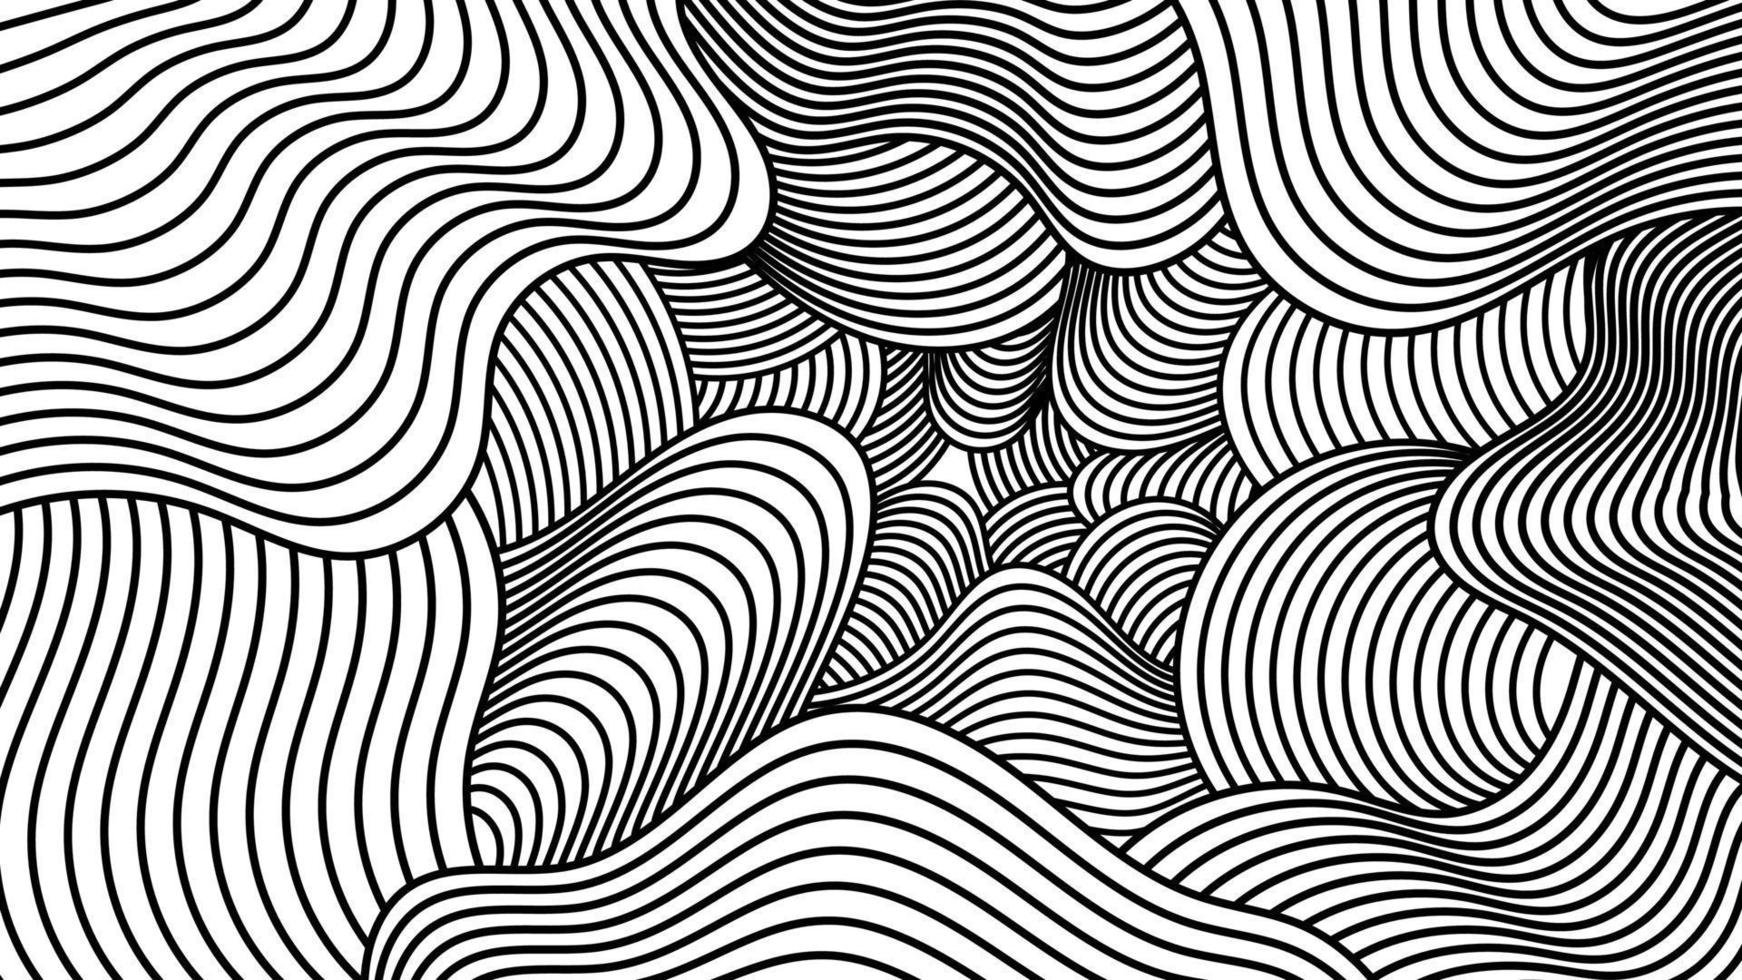 3d modern Golf kromme abstract presentatie achtergrond. lijnen laag achtergrond. abstract strepen decoratie, patroon, 3d vector illustratie. zwart en wit achtergrond